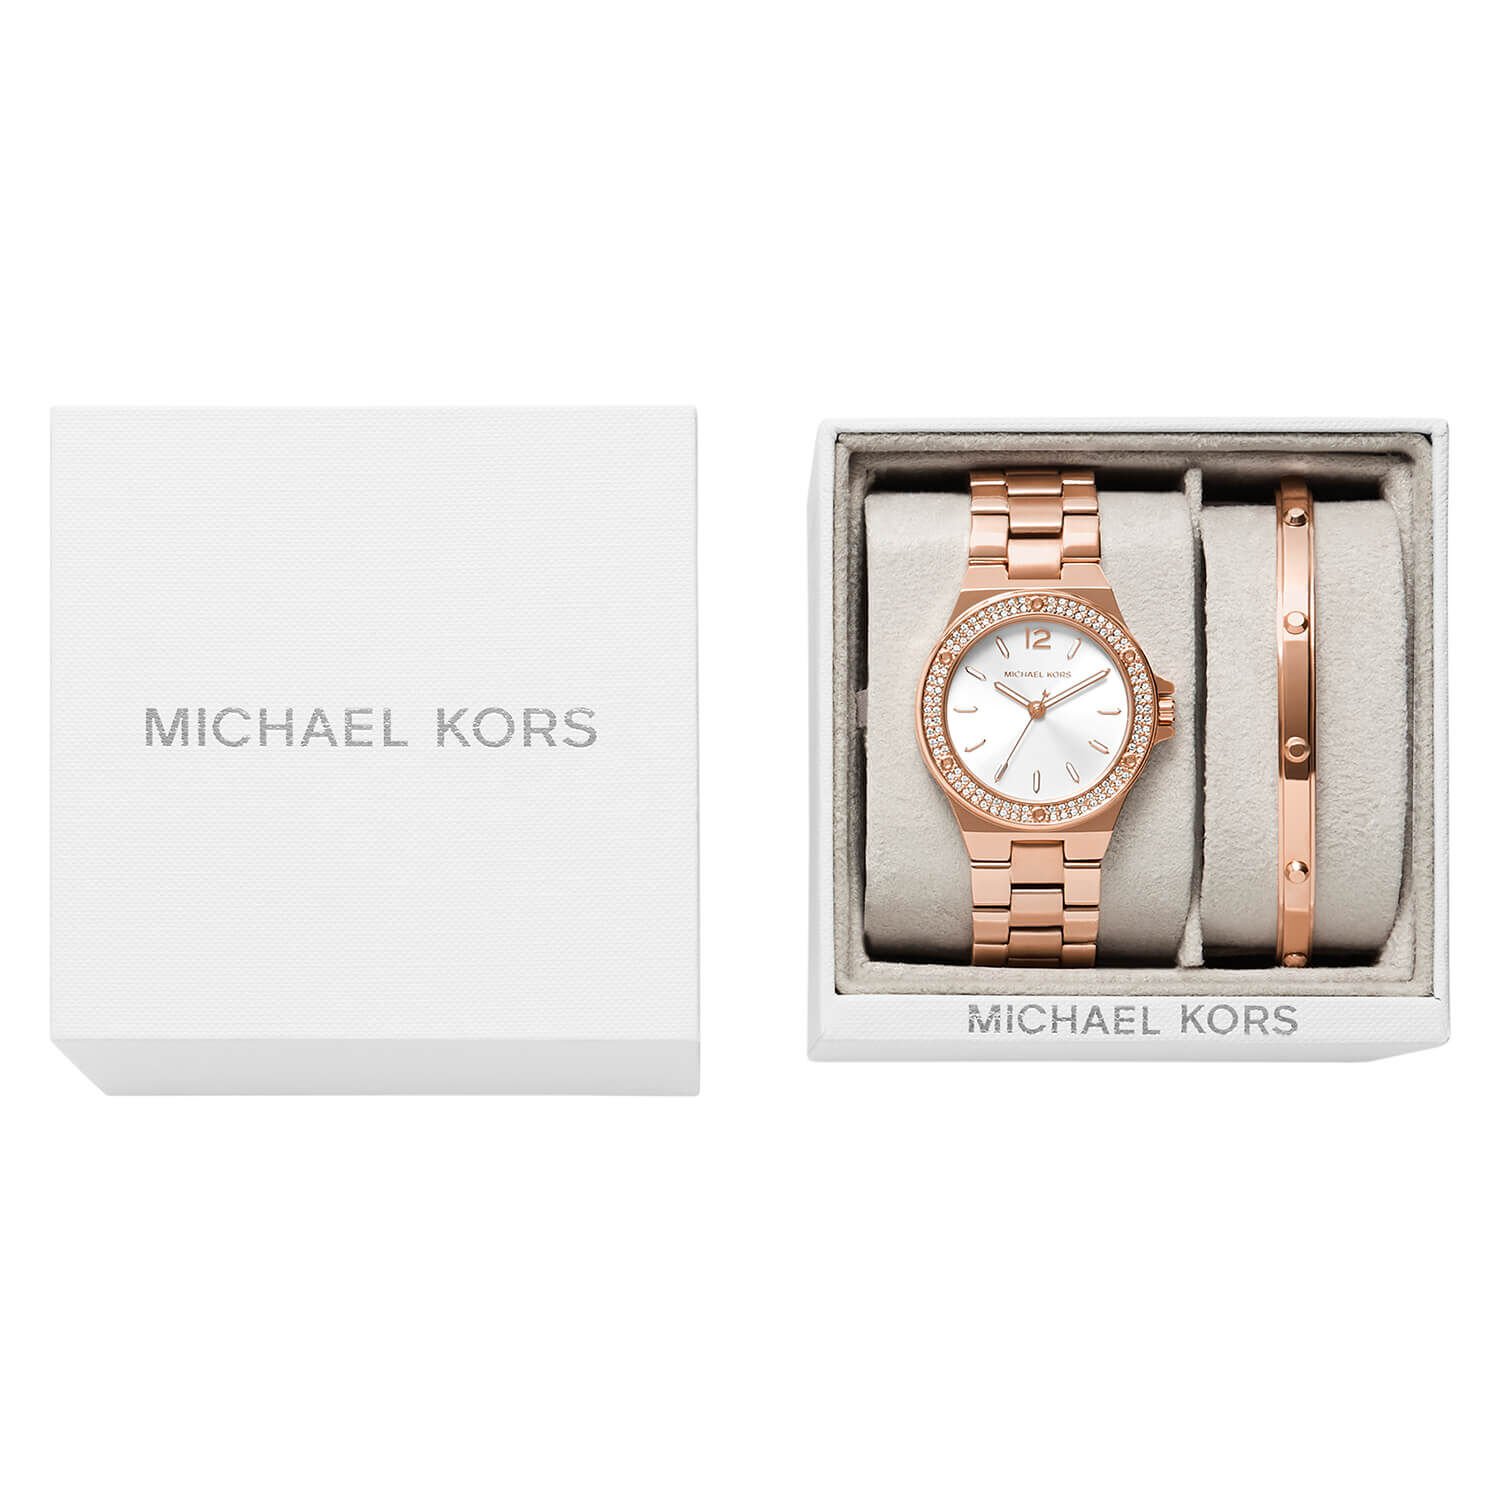 Michael Kors Womens Parker SilverTone Watch MK5353  Michael Kors  Clothing Shoes  Jewelry  Amazoncom